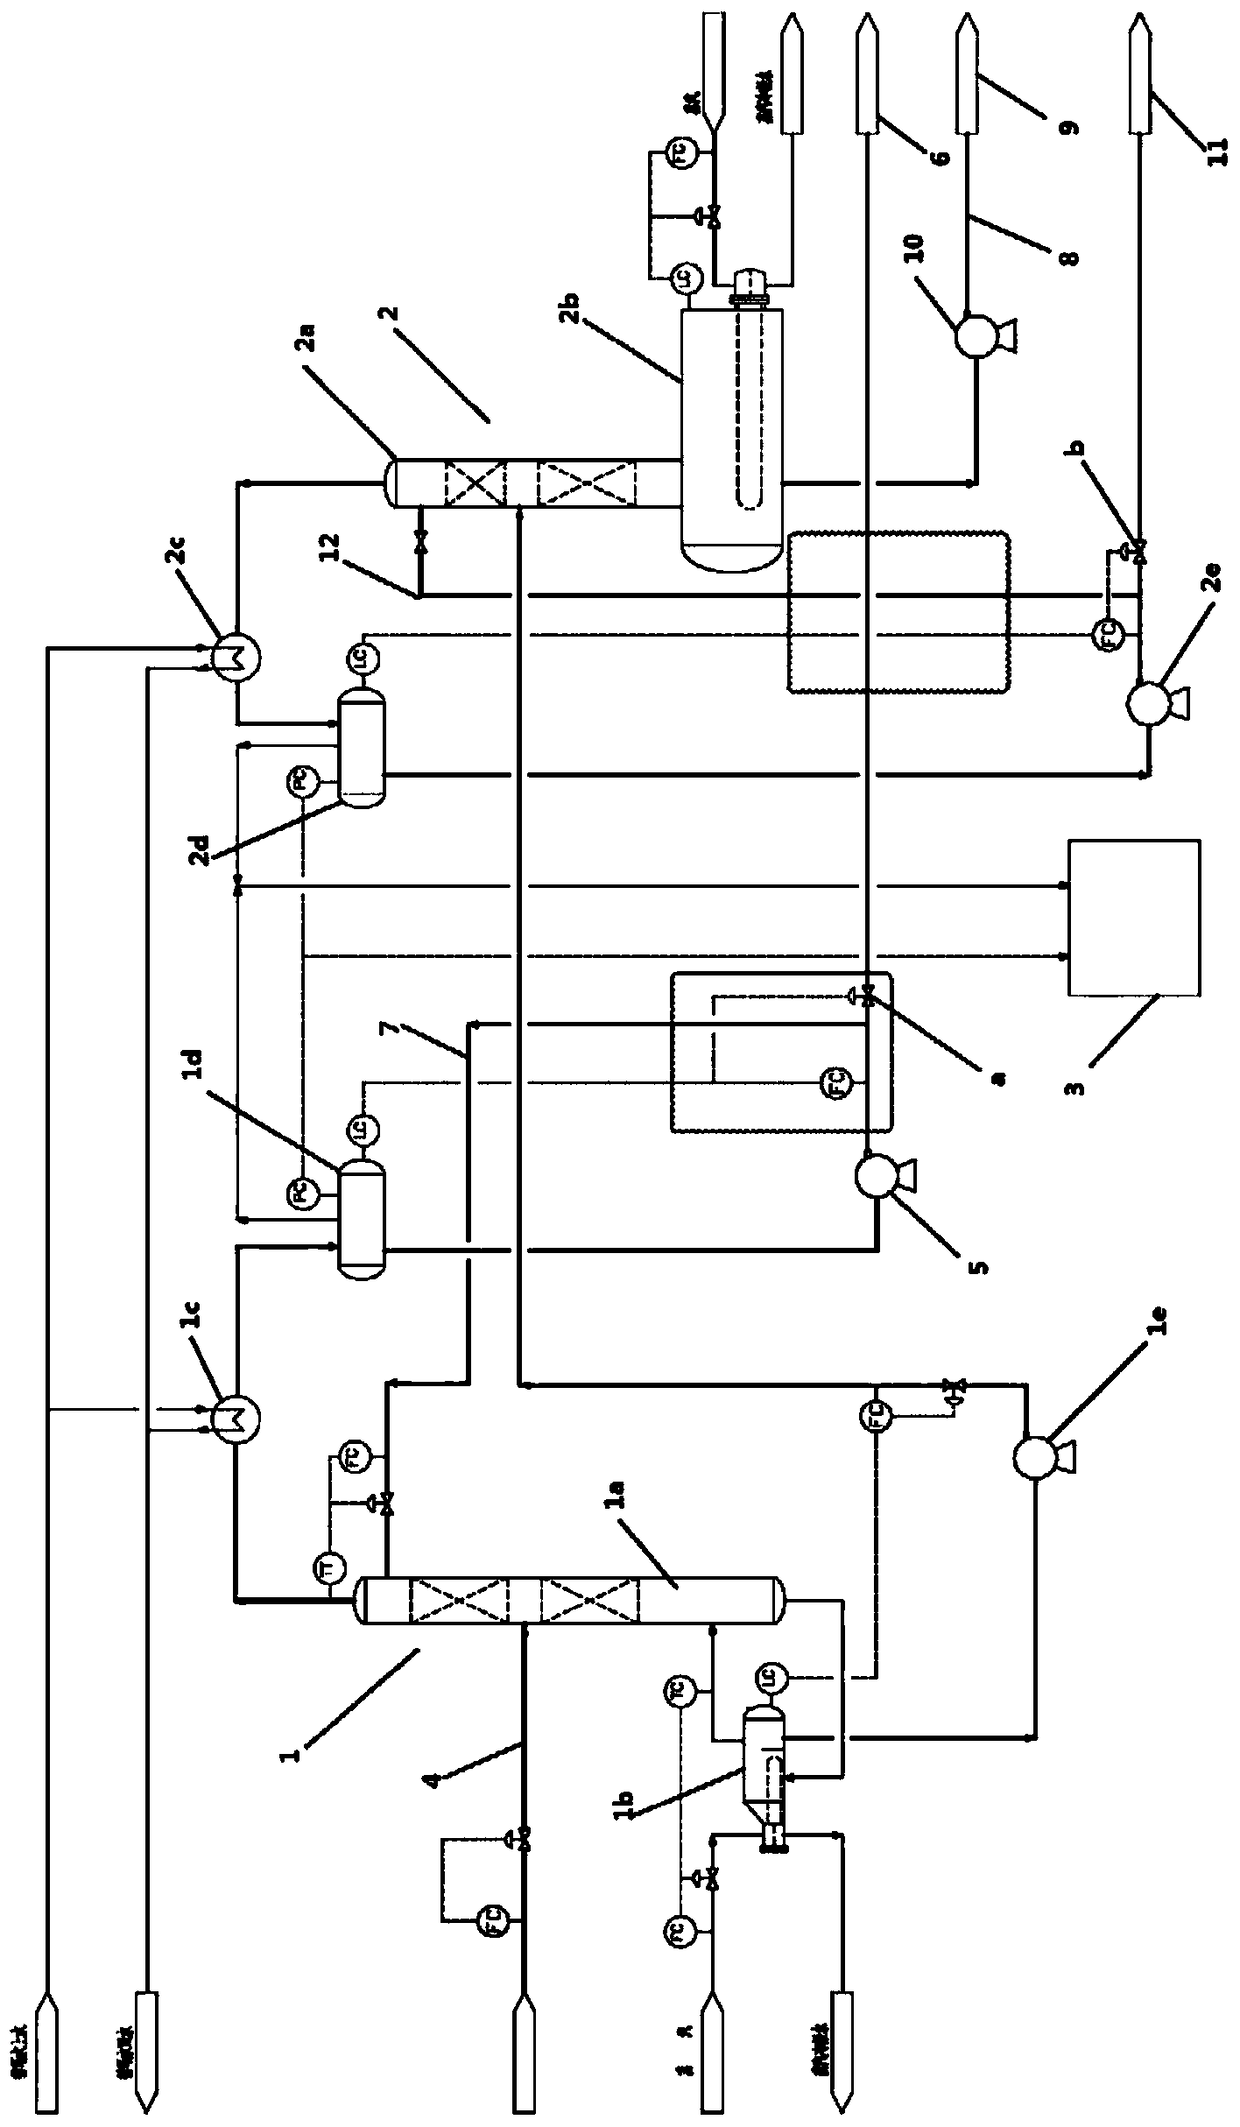 Distillation system and technology of ethylene glycol and diethylene glycol in polyol waste liquid